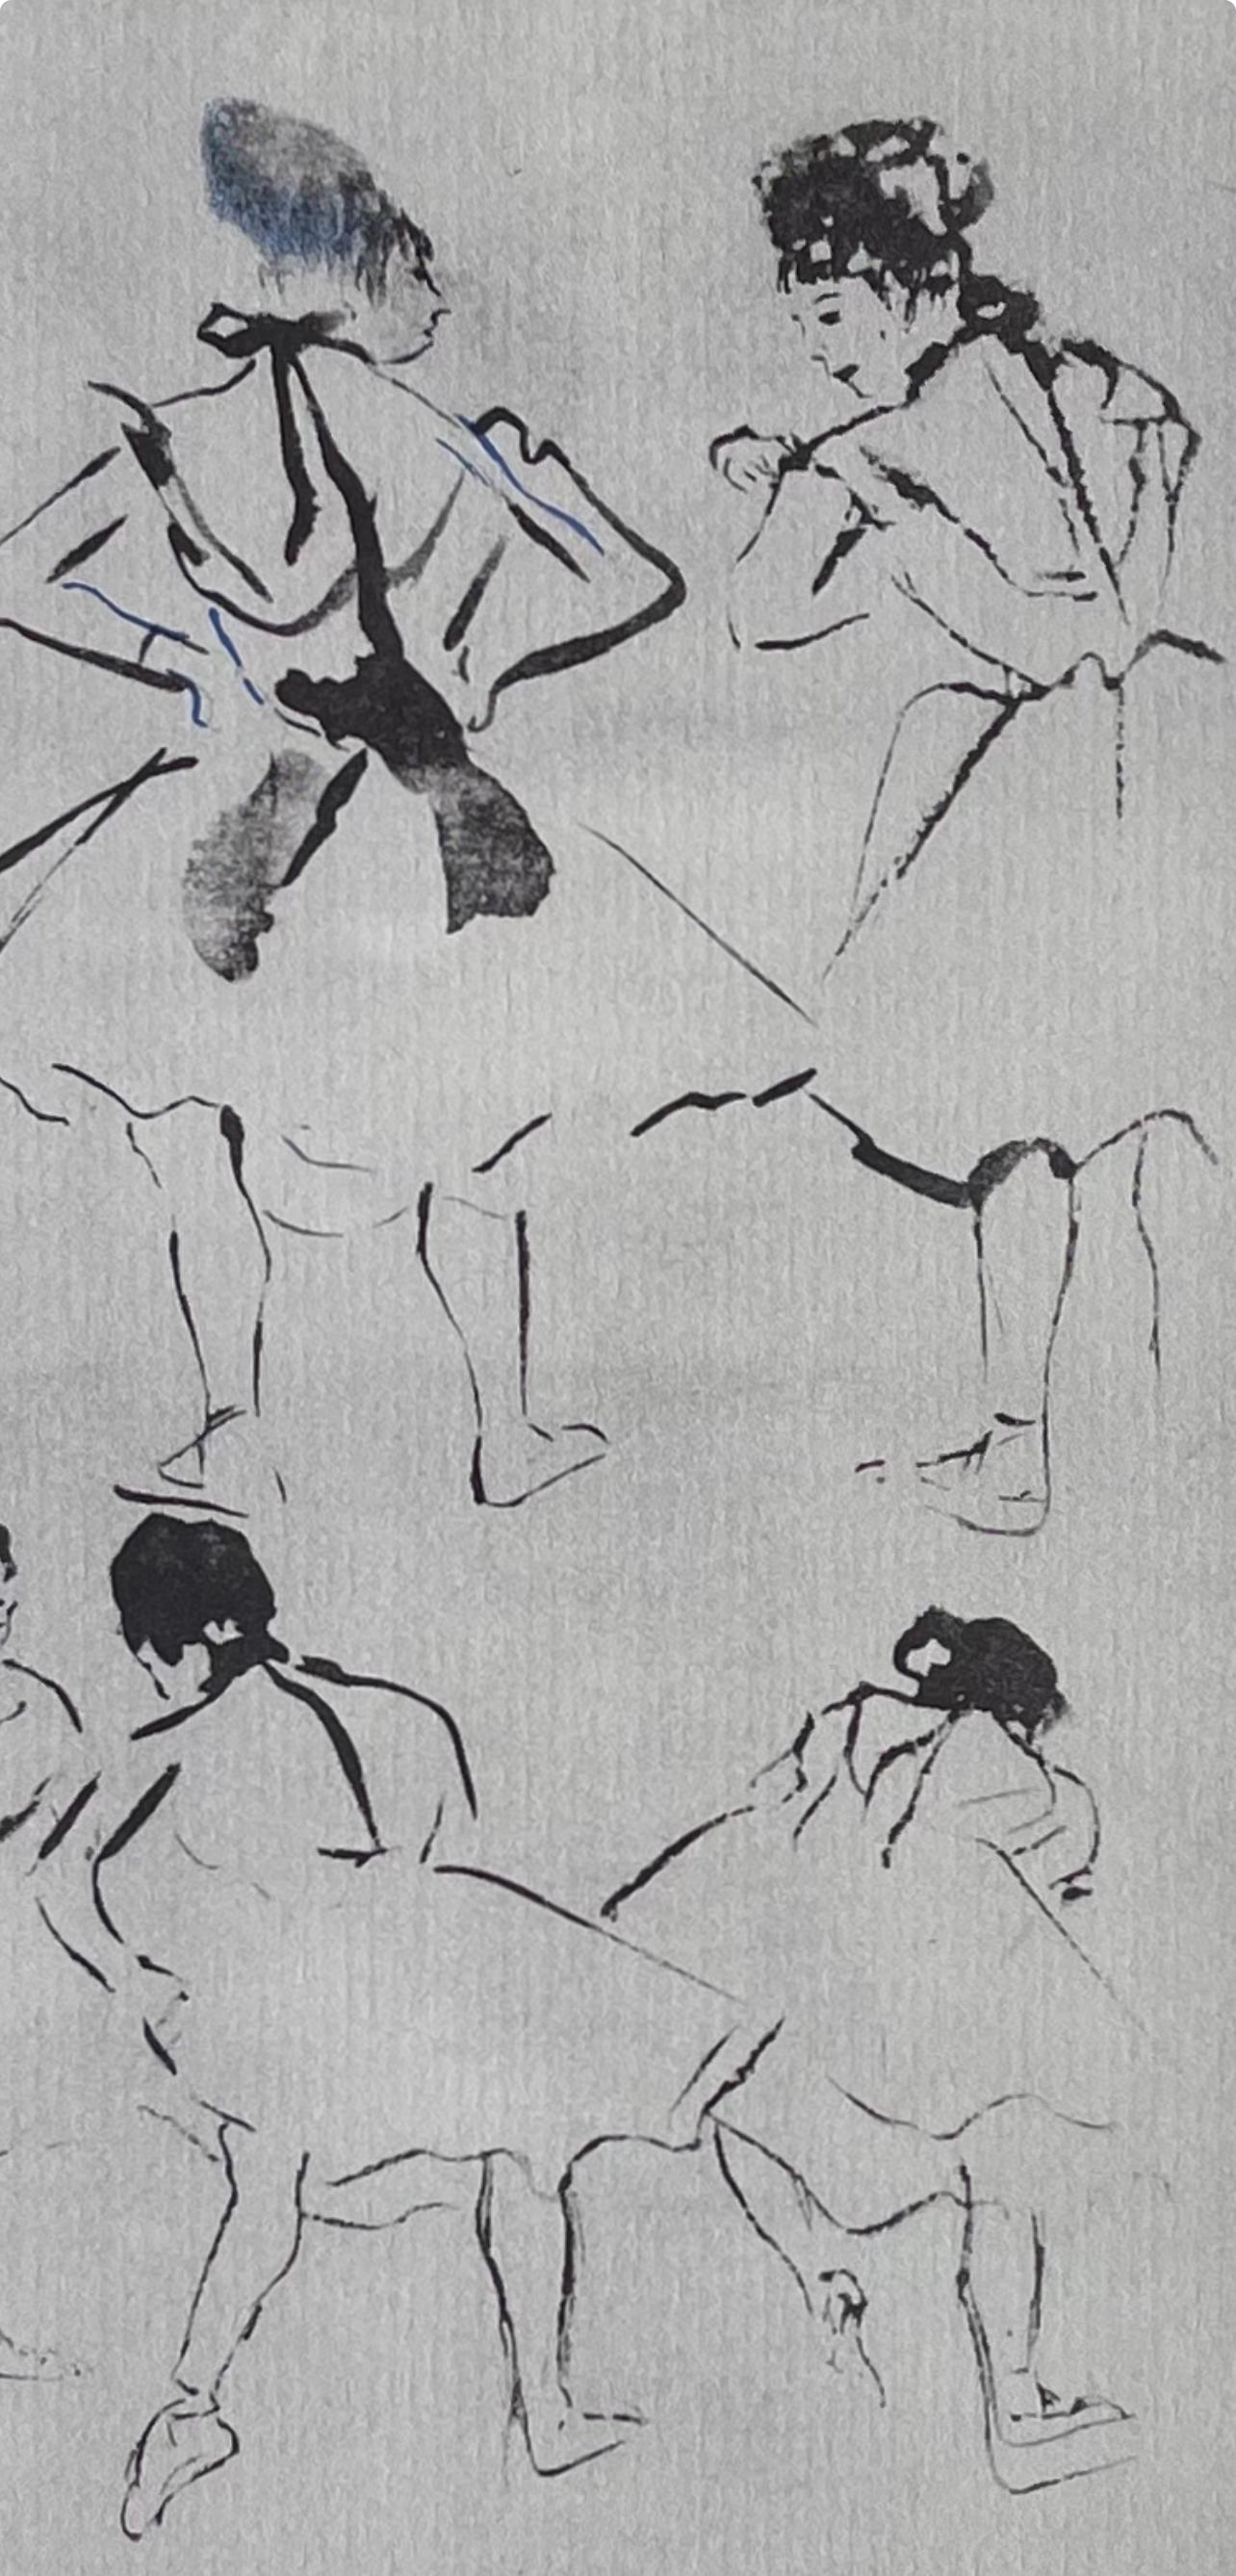 Degas, Sketch of Dancers, Ten Ballet Sketches (after) - Print by Edgar Degas